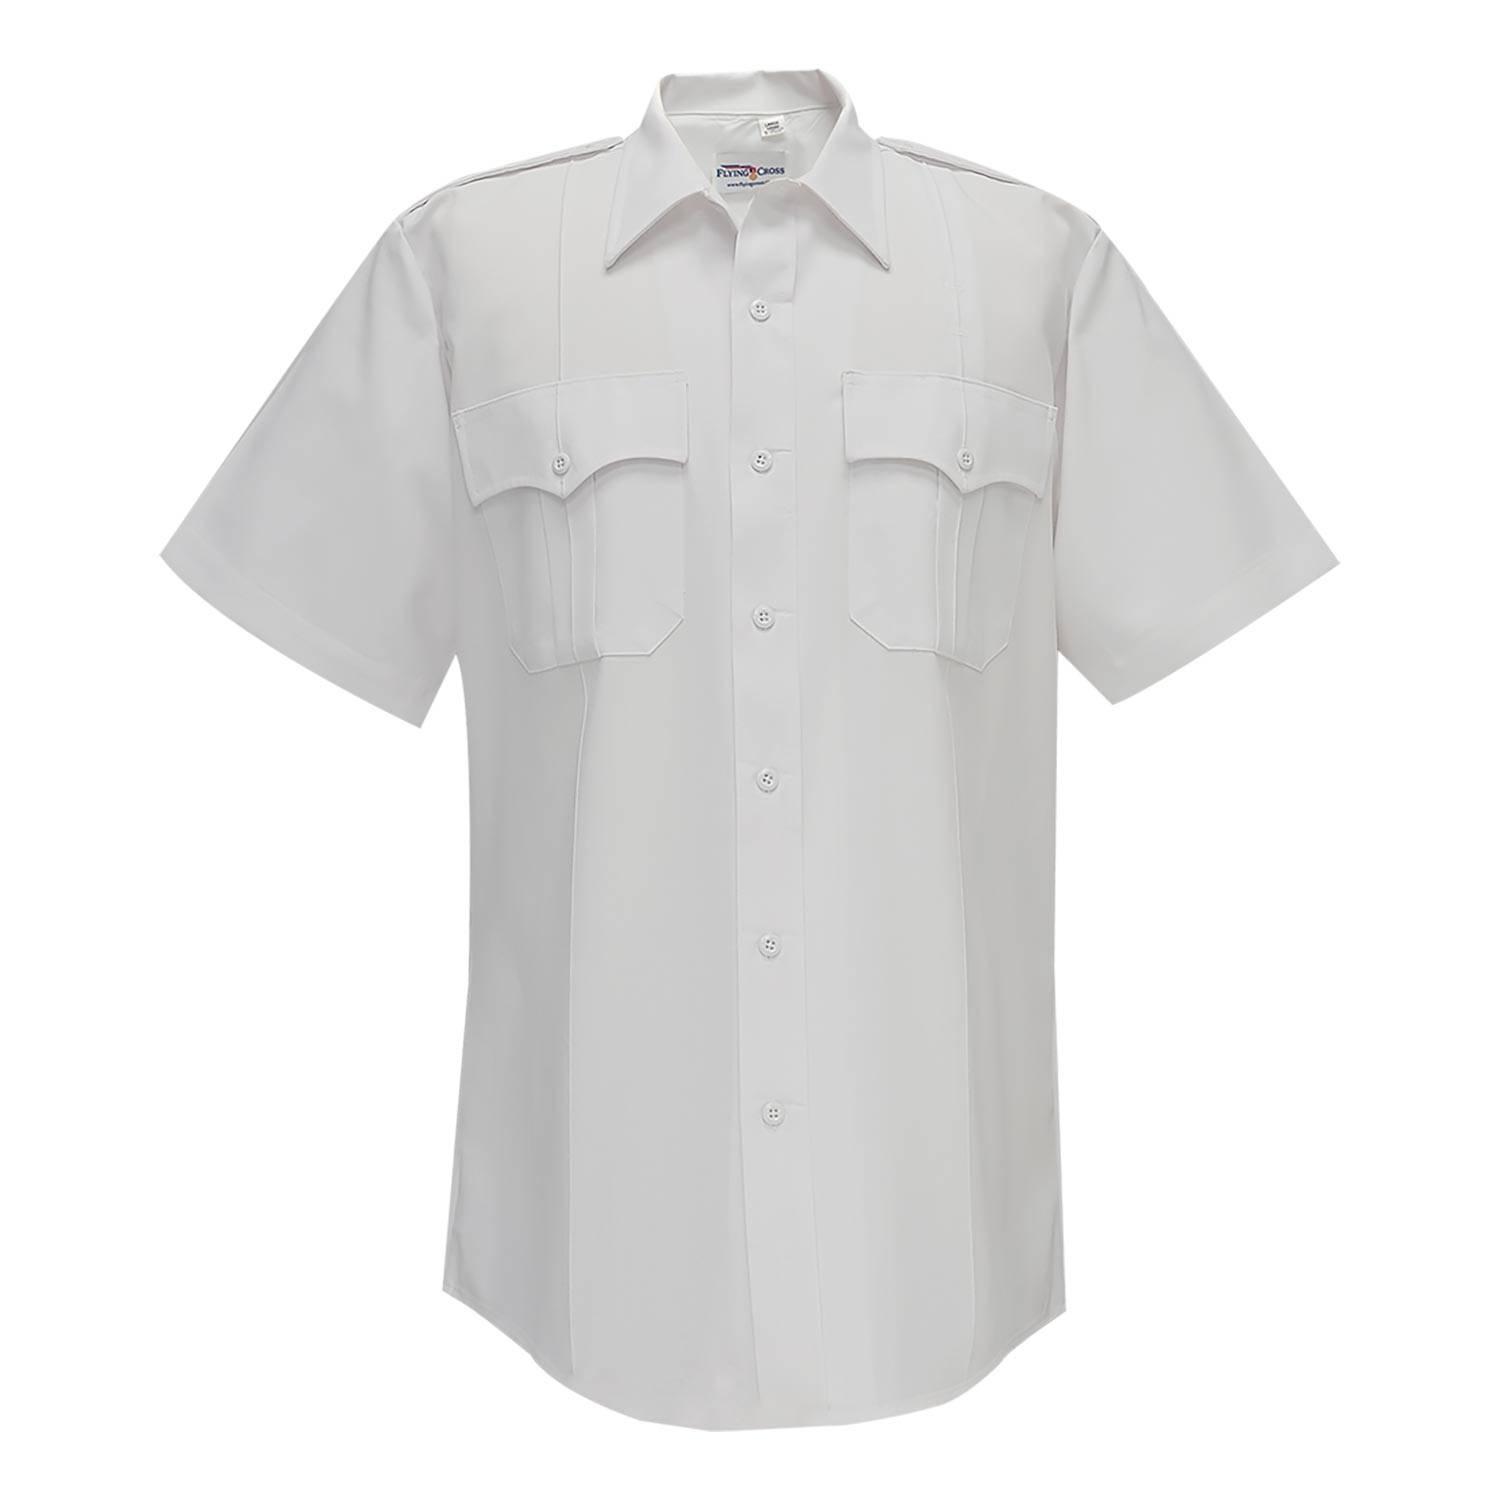 Flying Cross Men's Short Sleeve Uniform Shirt_EMS_FIRE_POLICE_Polyester/Cotton 